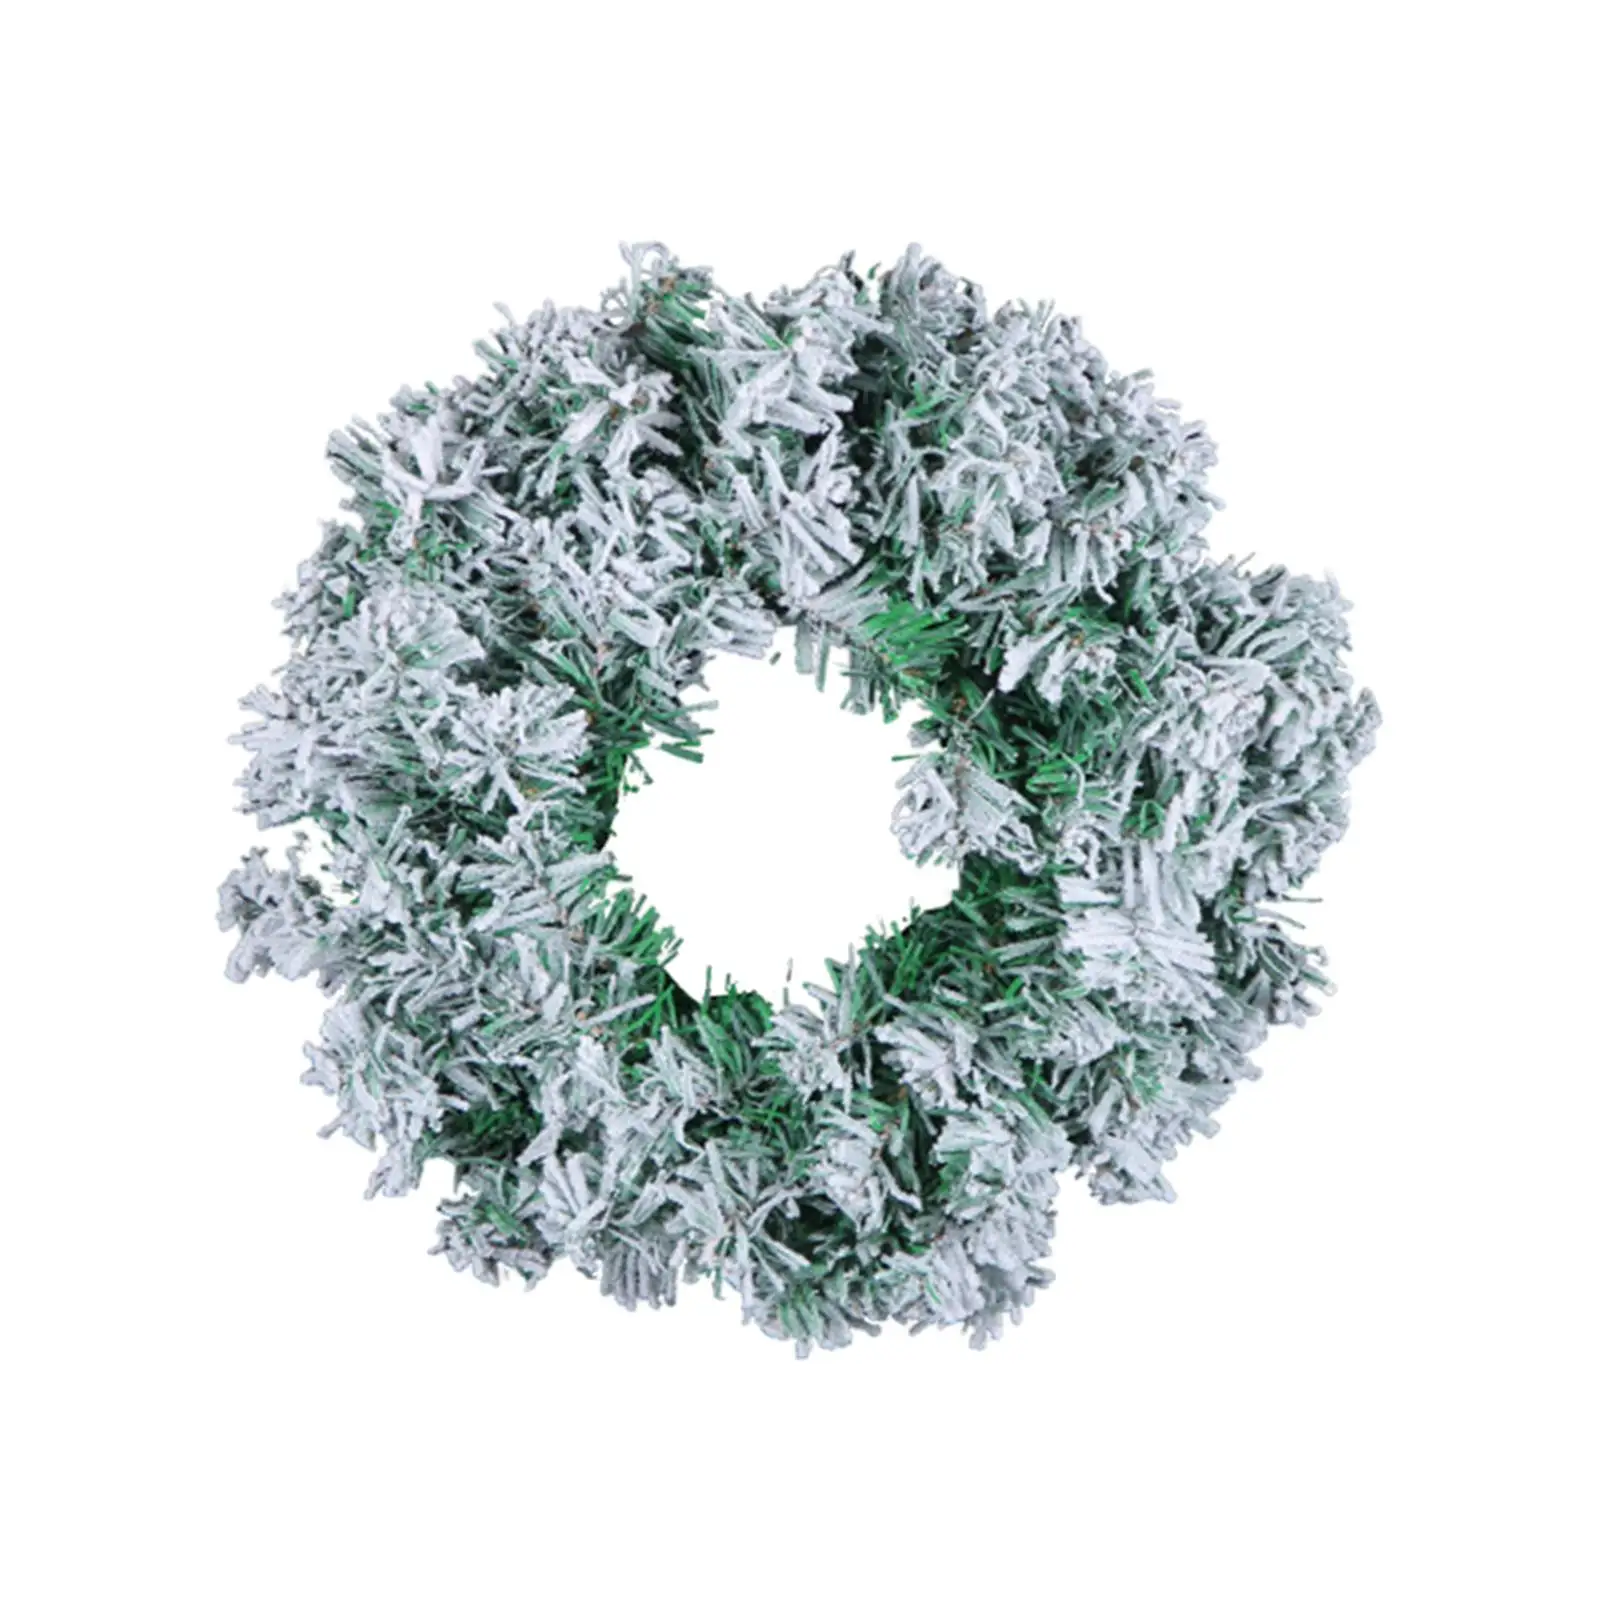 Artificial Christmas Wreath Xmas Decor Realistic Decorative Front Door Winter Wreath for Indoor Outdoor Window Home Wall